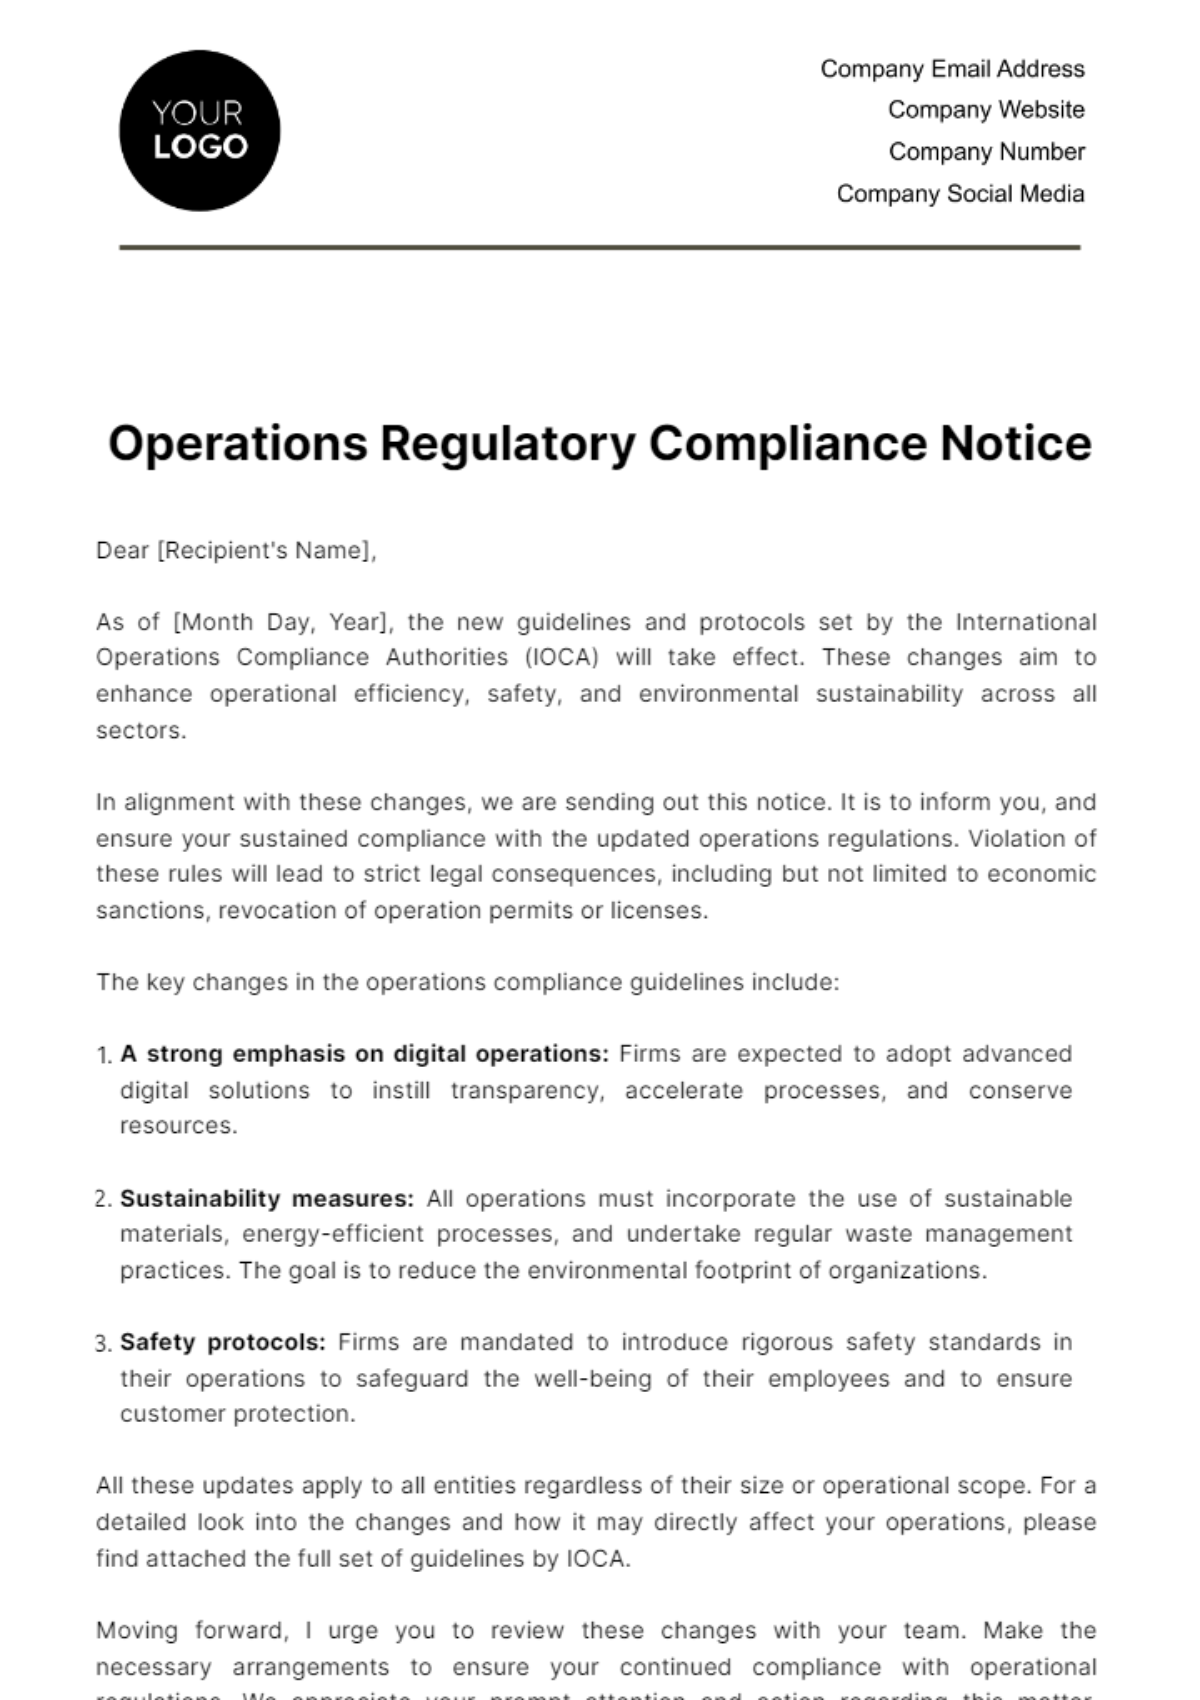 Operations Regulatory Compliance Notice Template